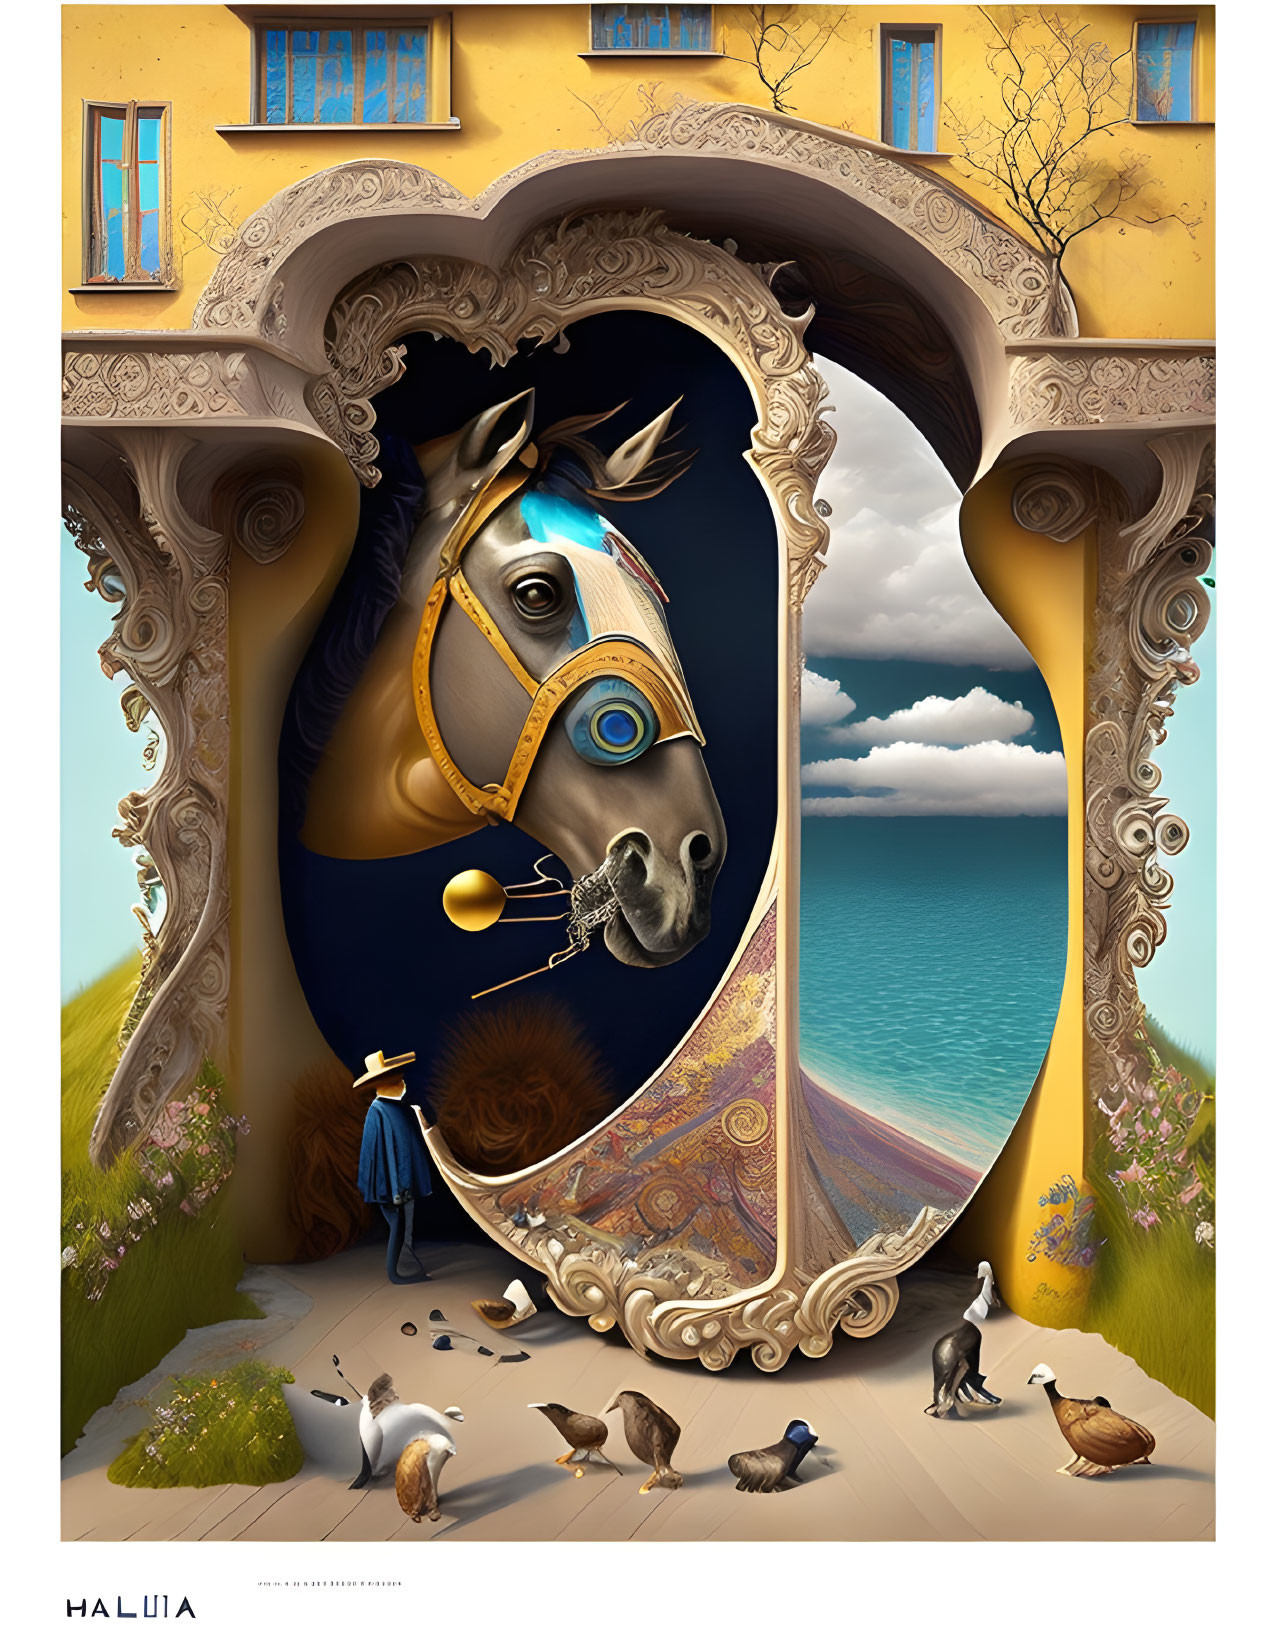 Surreal coastal scene with mechanical horse head in ornate frame